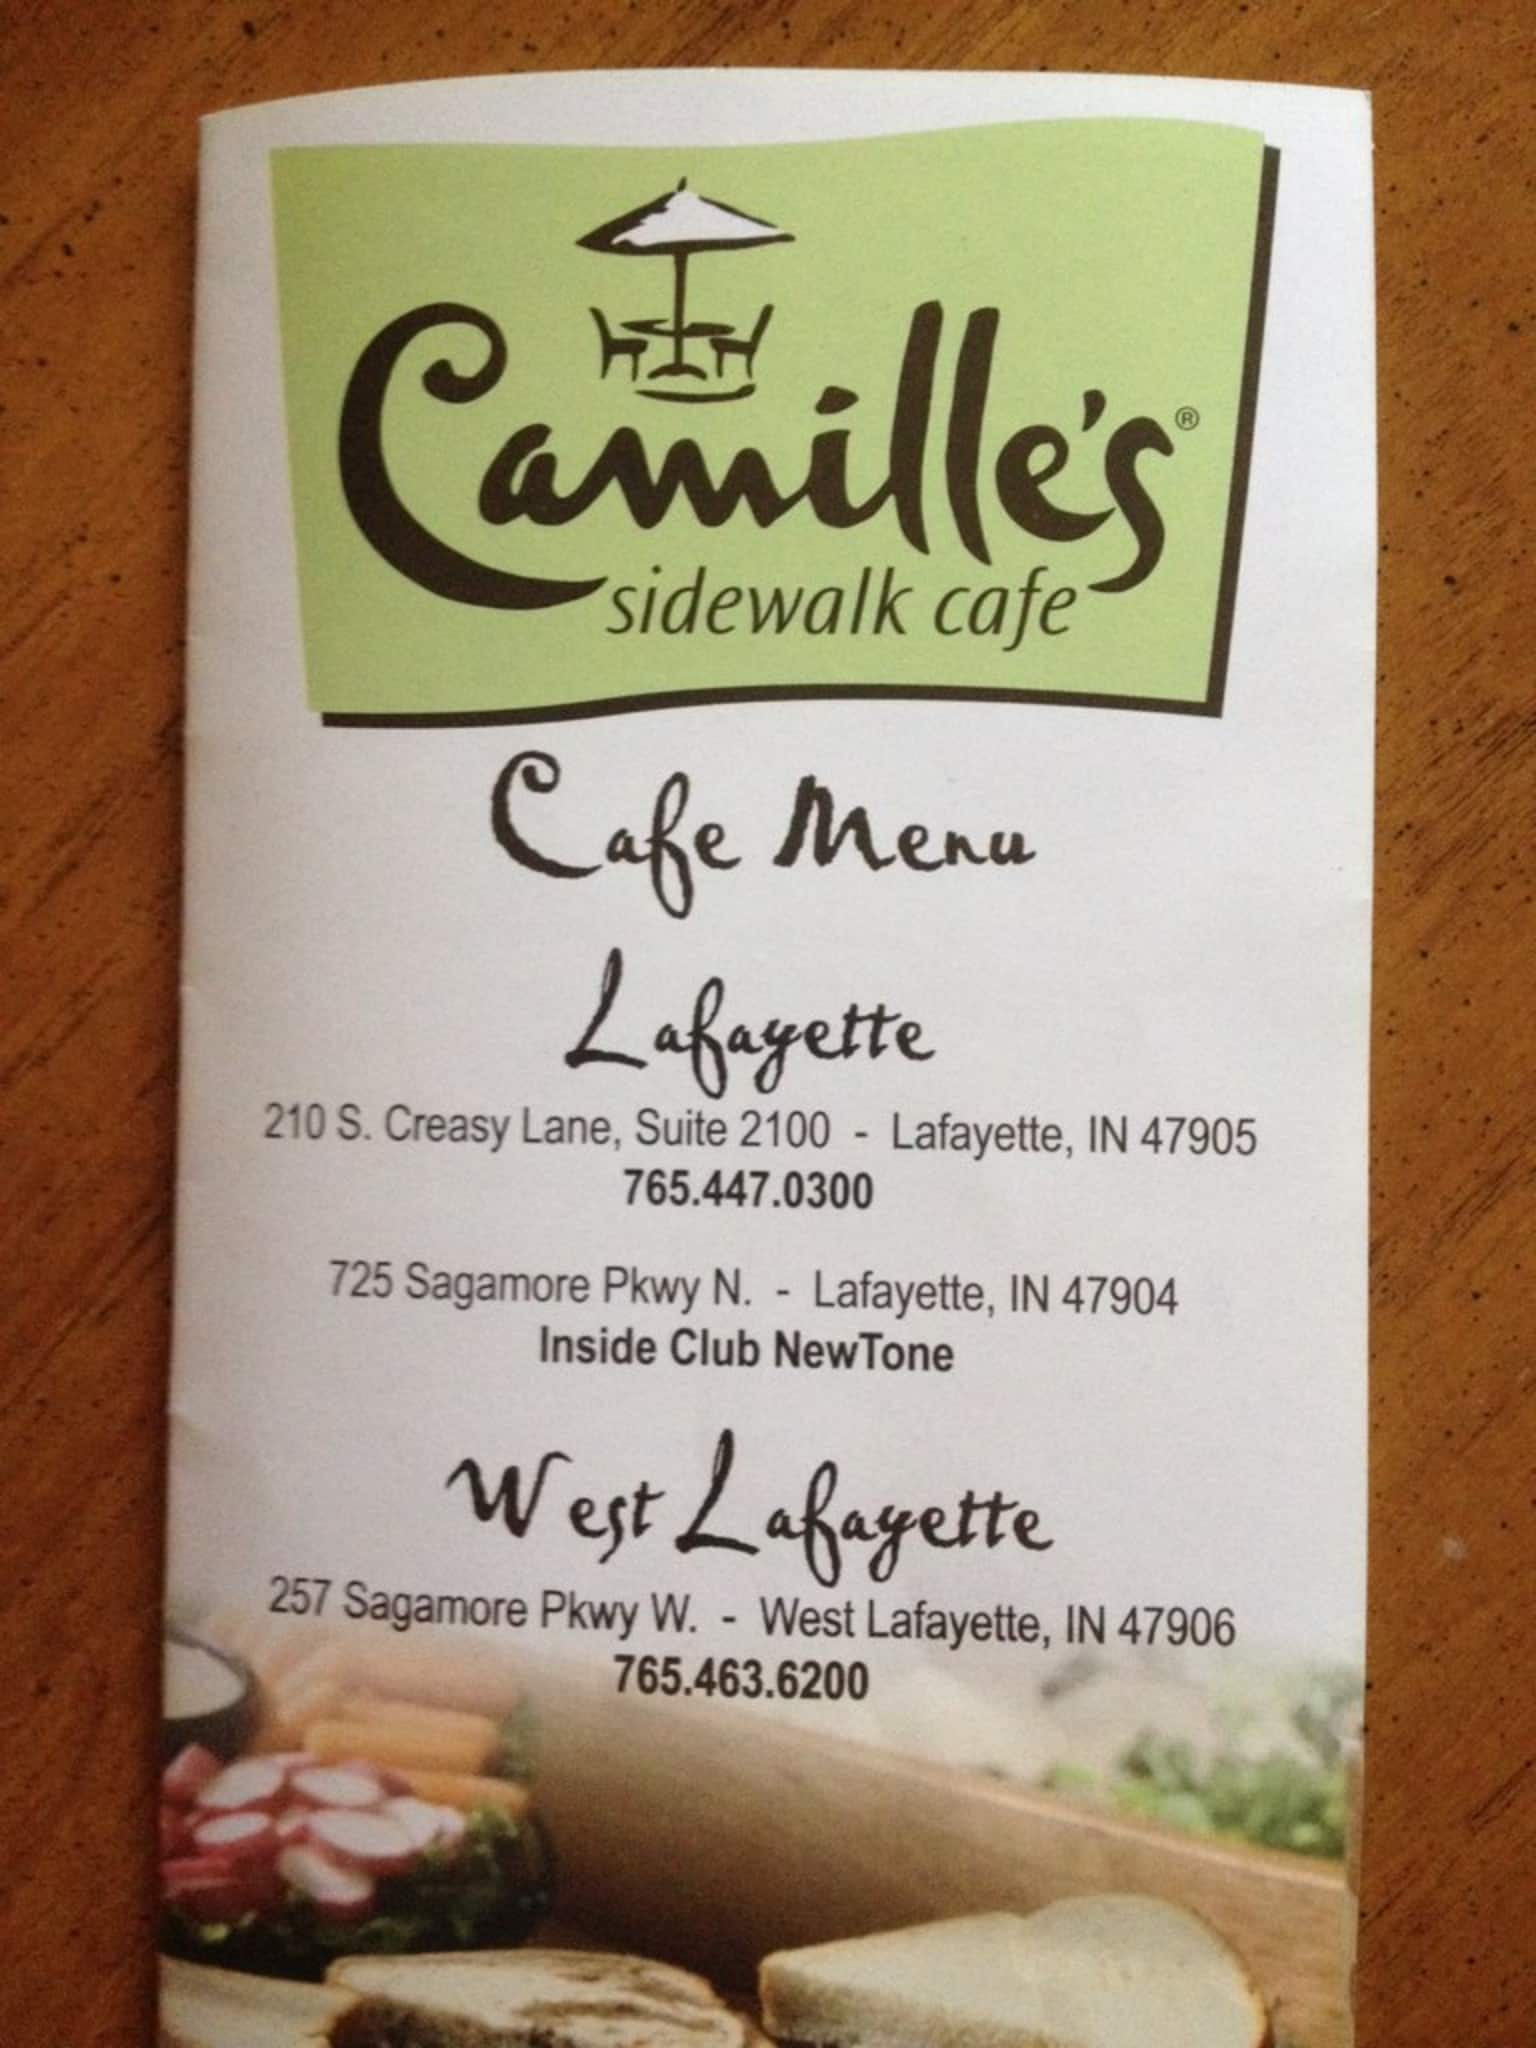 Camille's Sidewalk Cafe Menu - Urbanspoon/Zomato